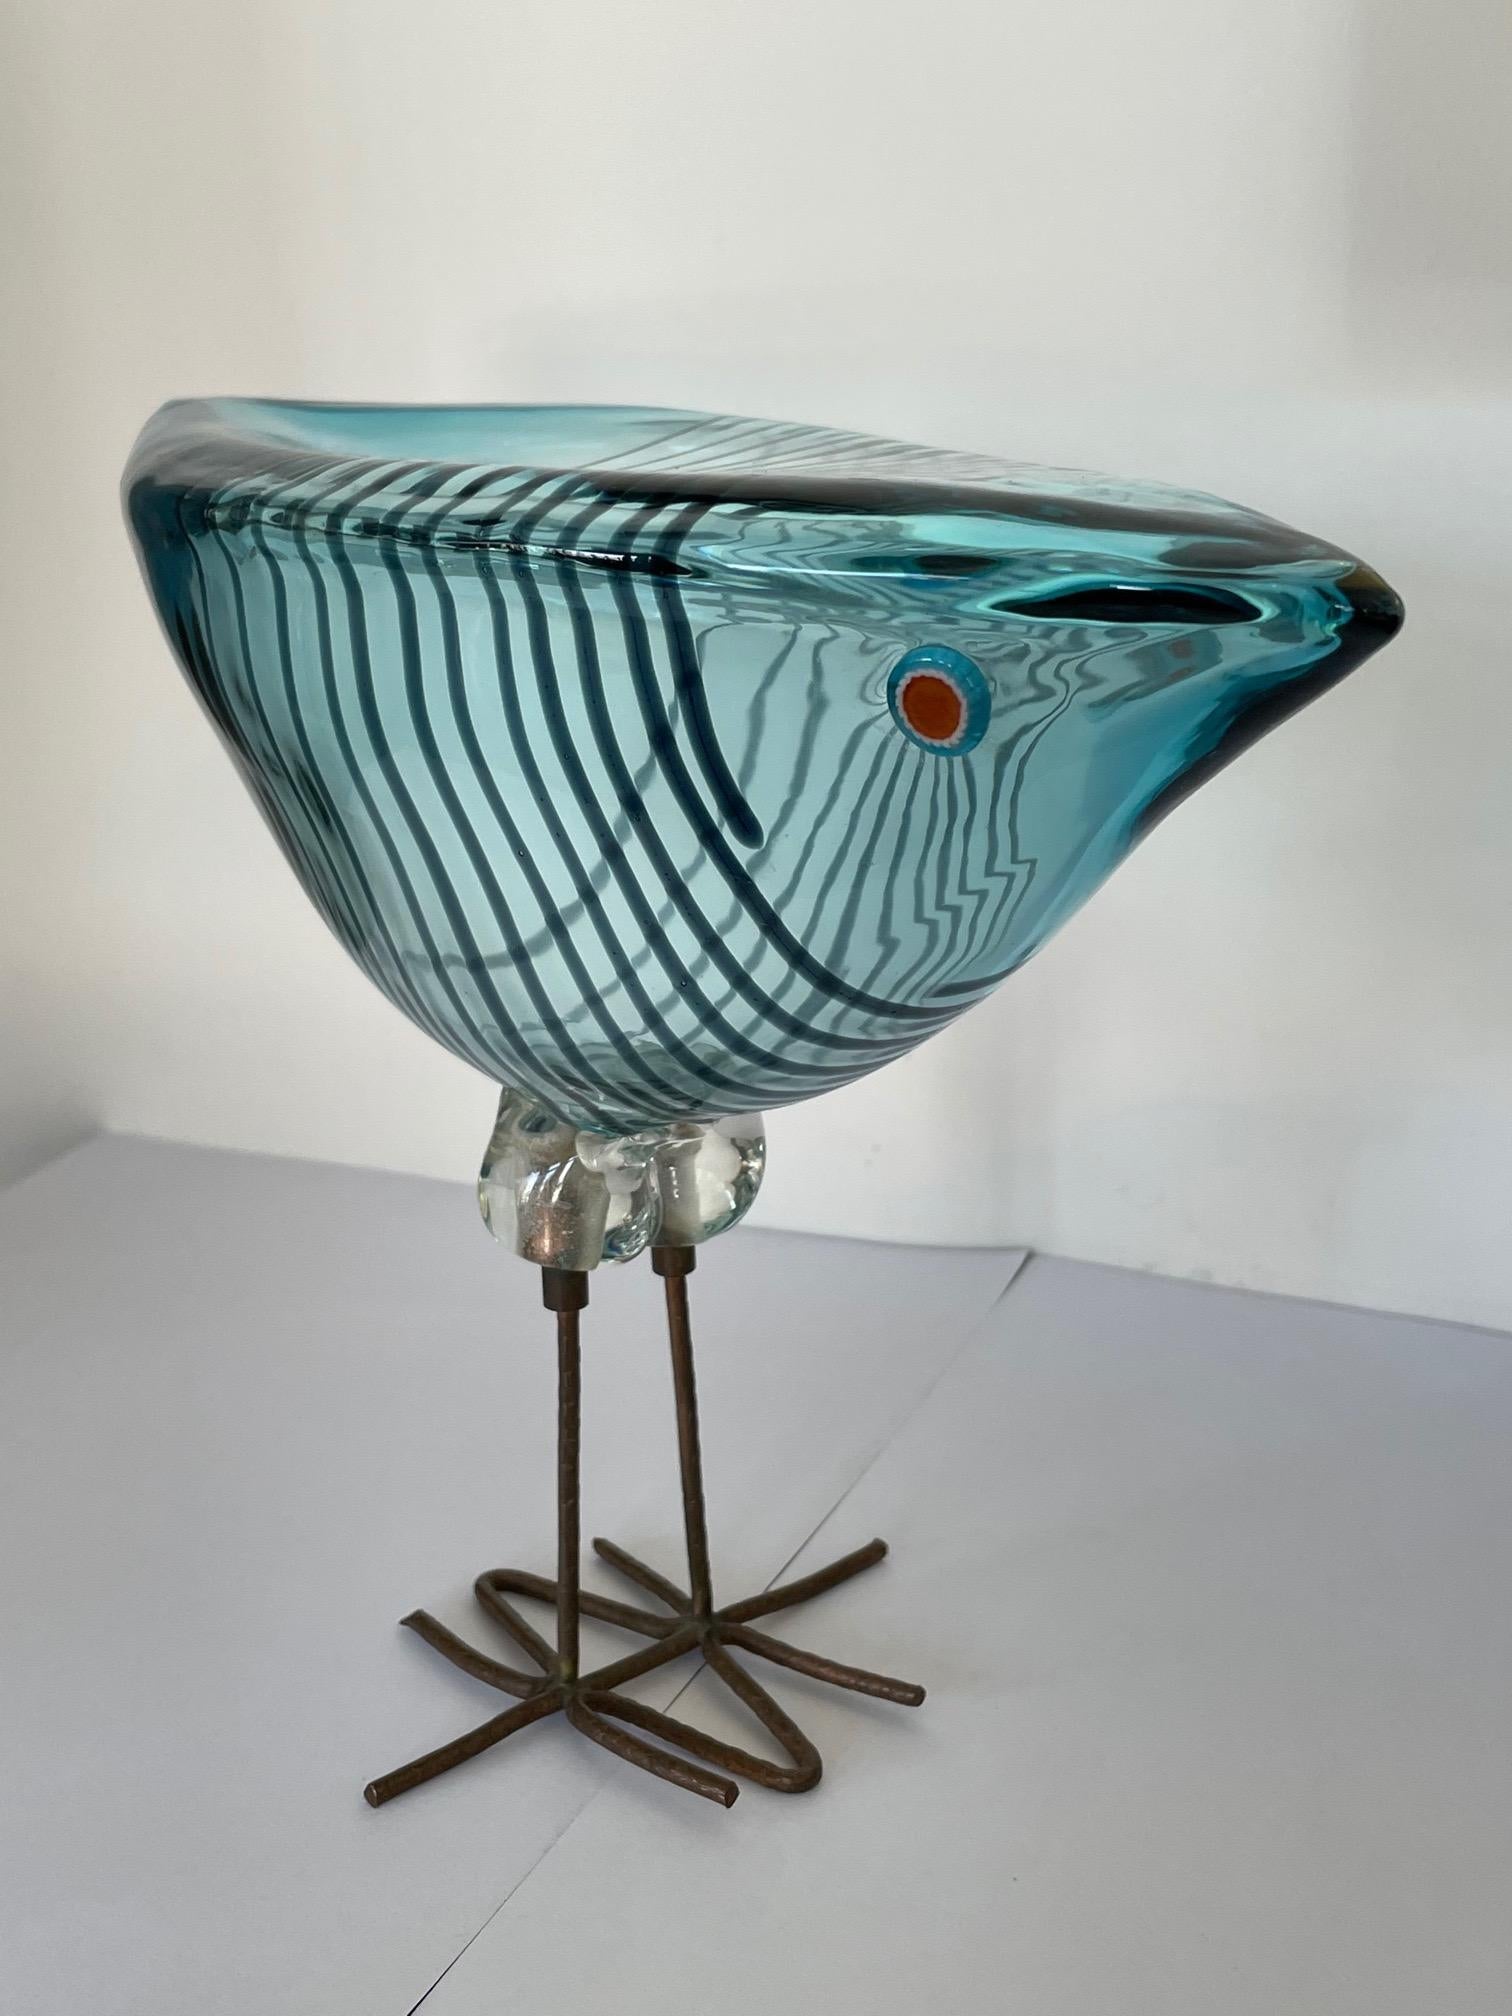 A fantastic glass bird (Pulcino) by Alessandro Pianon for Vetreria Vistosi Murano, circa 1970s. The eyes are murrine glass, base is brass.